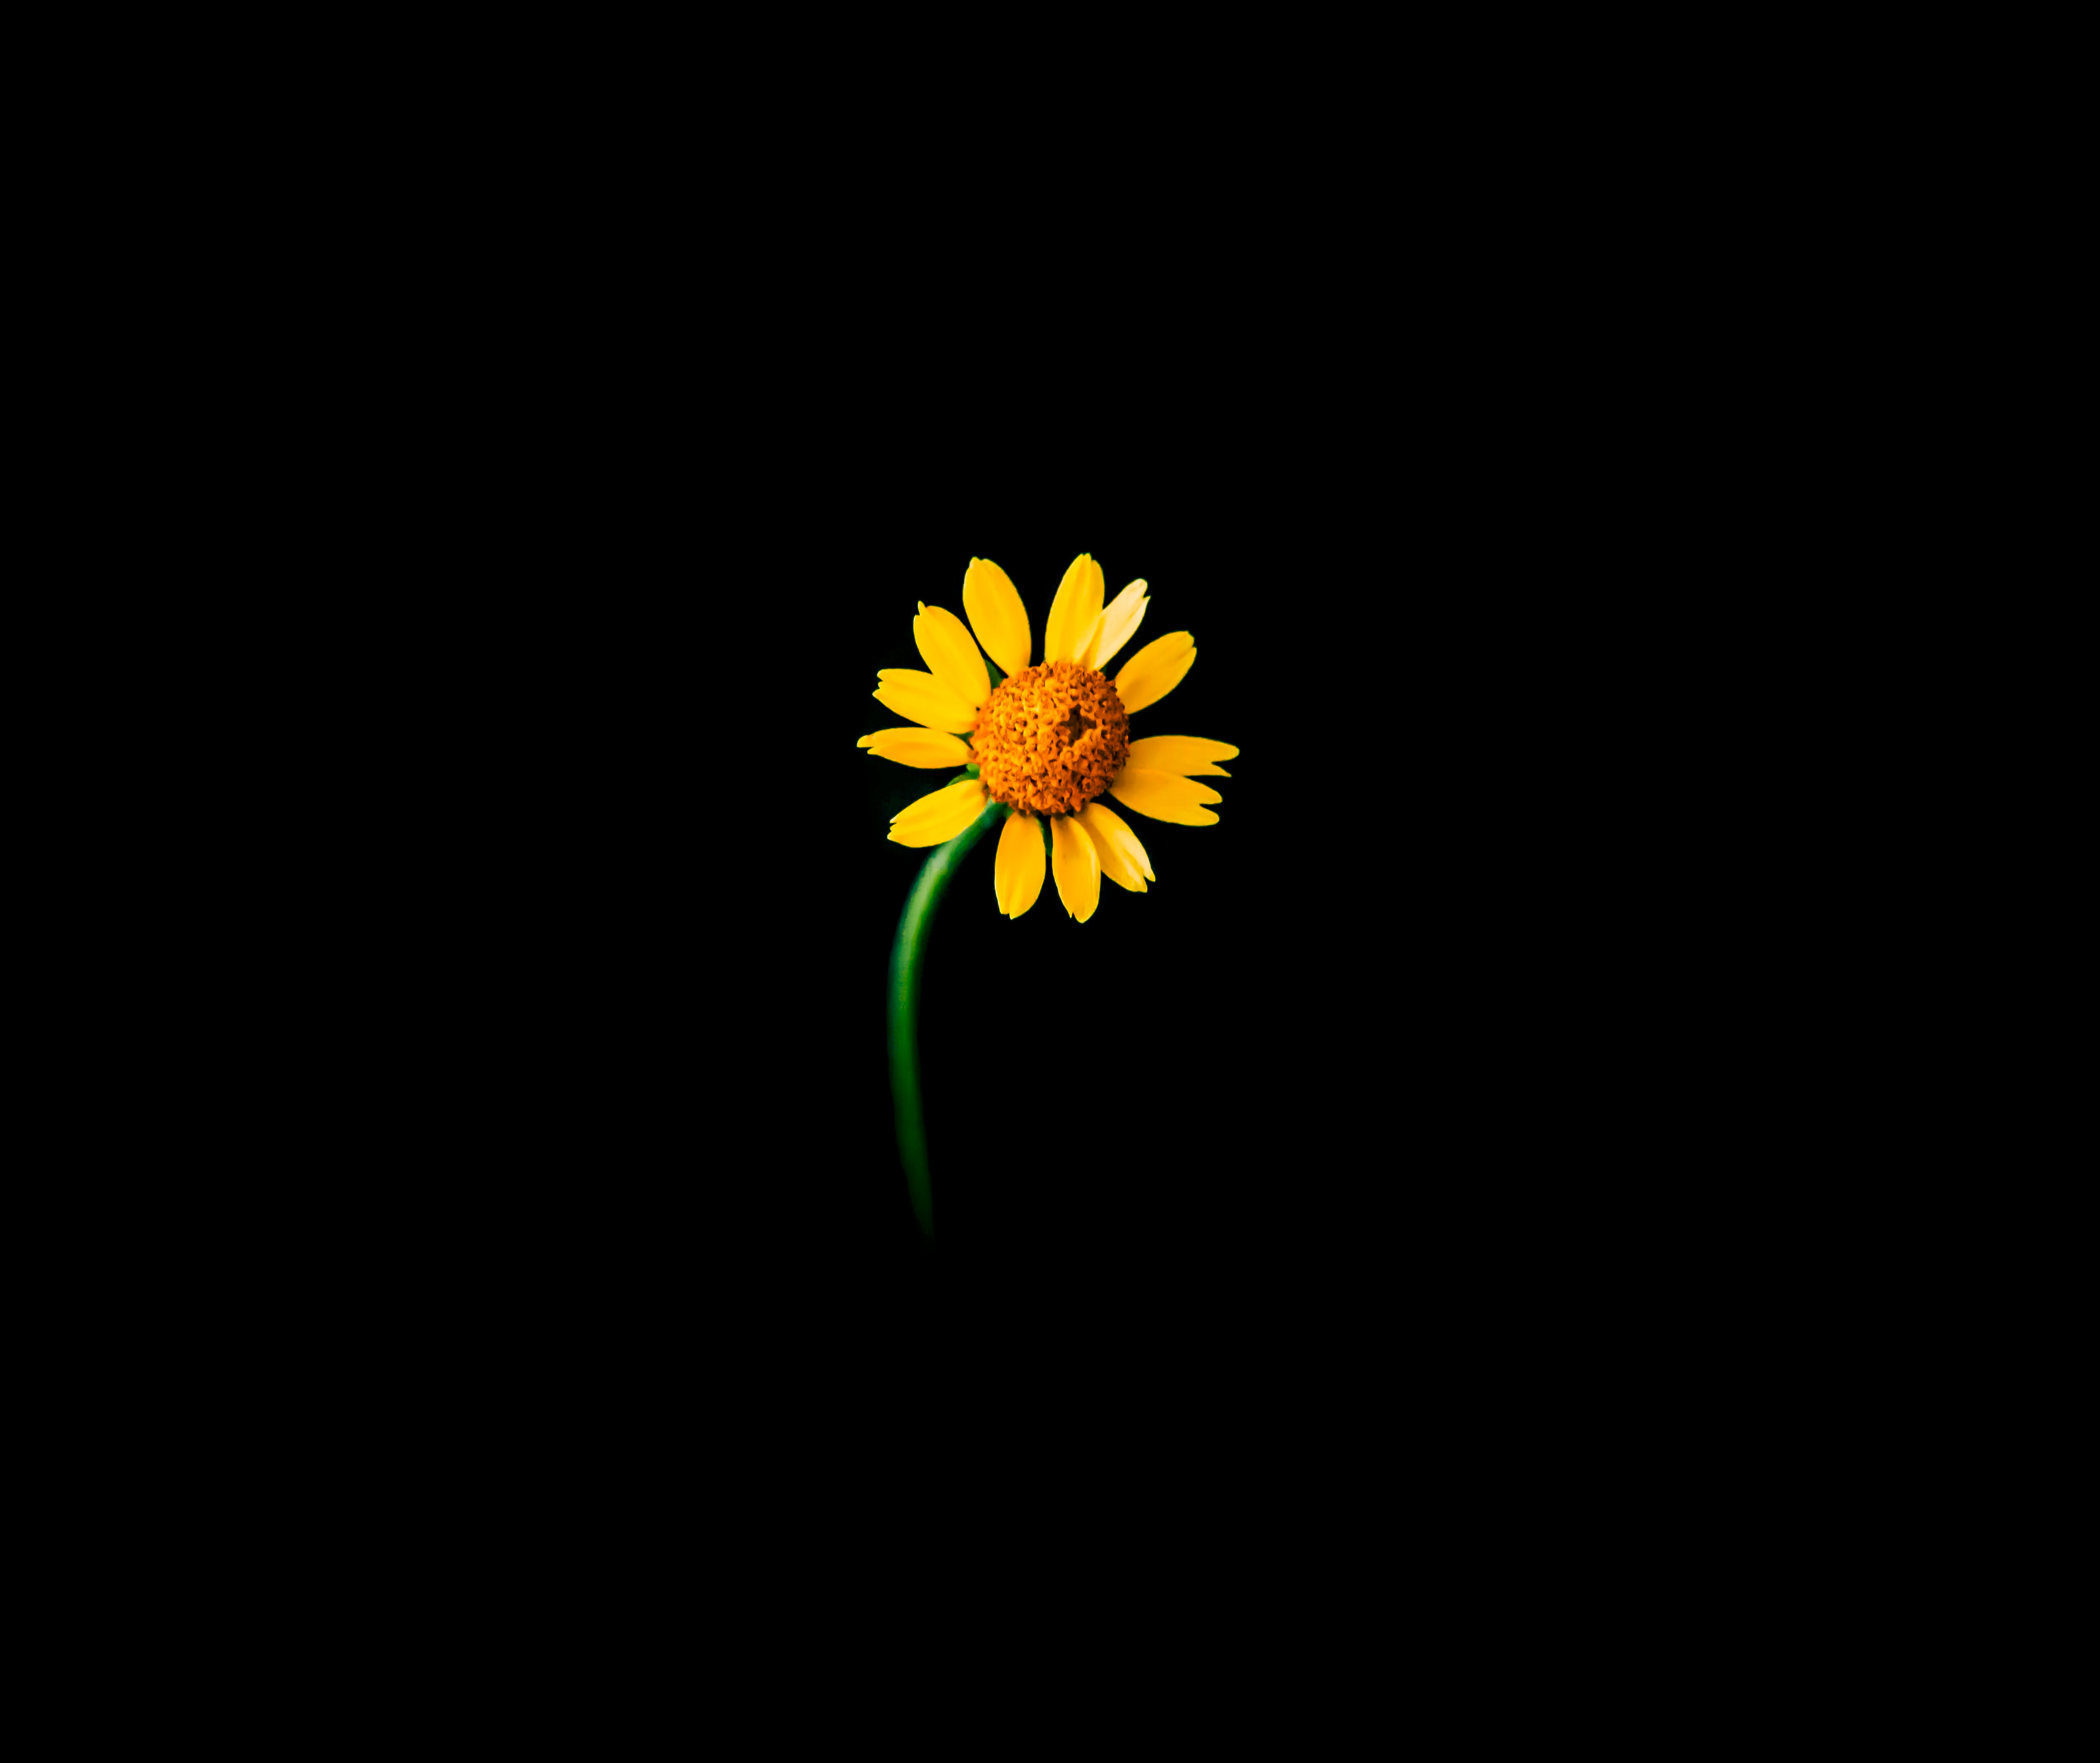 Sunflower Black Background Images  Free Download on Freepik